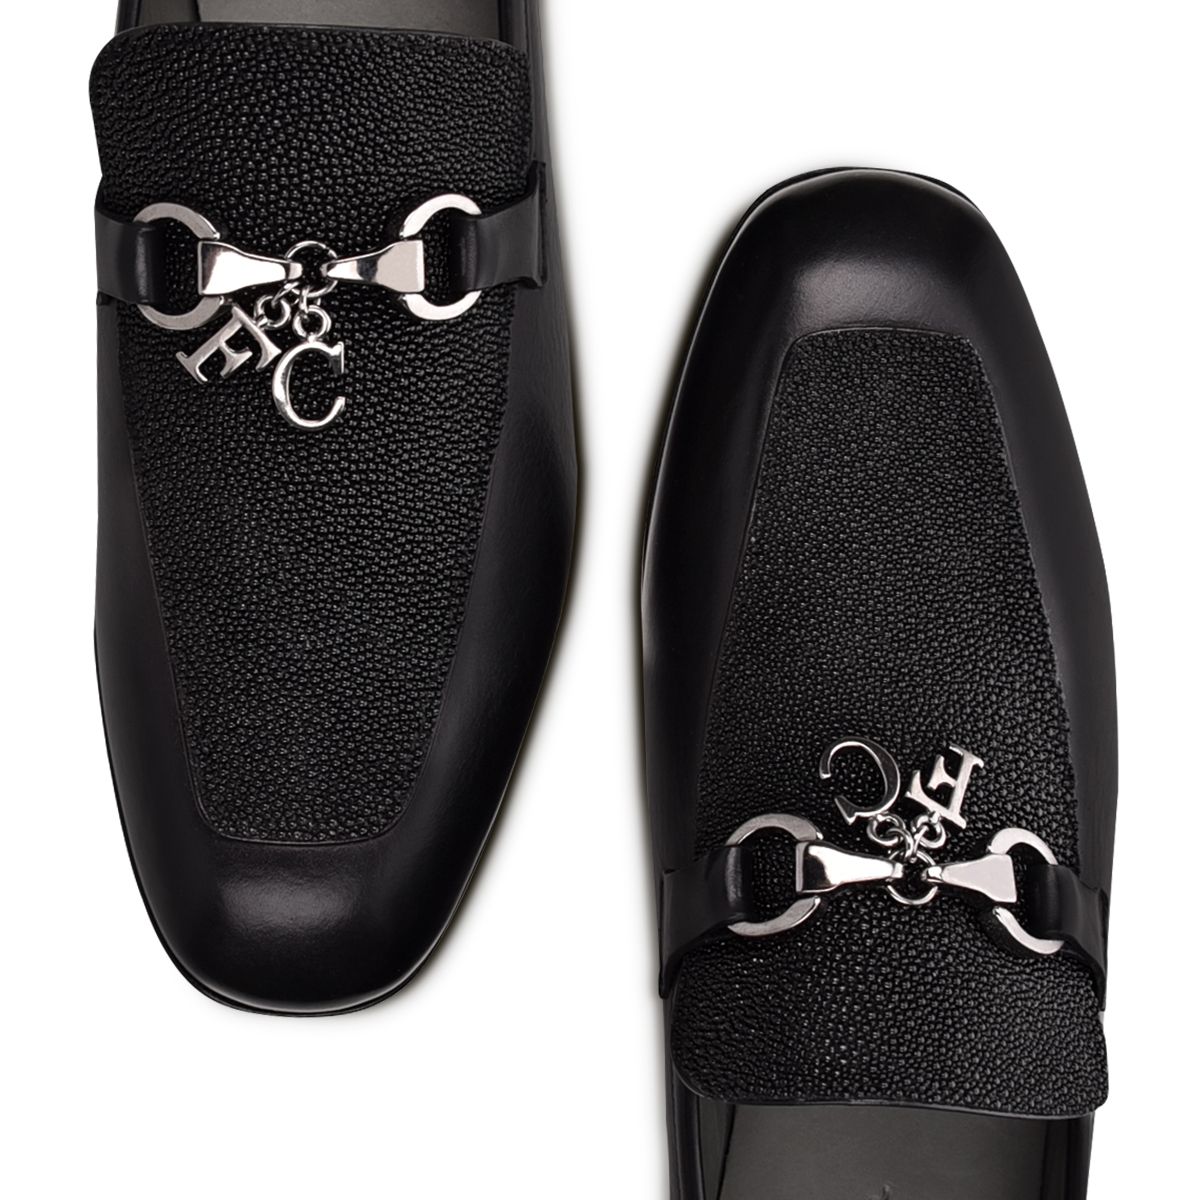 S46MTTS - Cuadra black dress casual stingray bit loafer for women-FRANCO CUADRA-Kuet-Cuadra-Boots